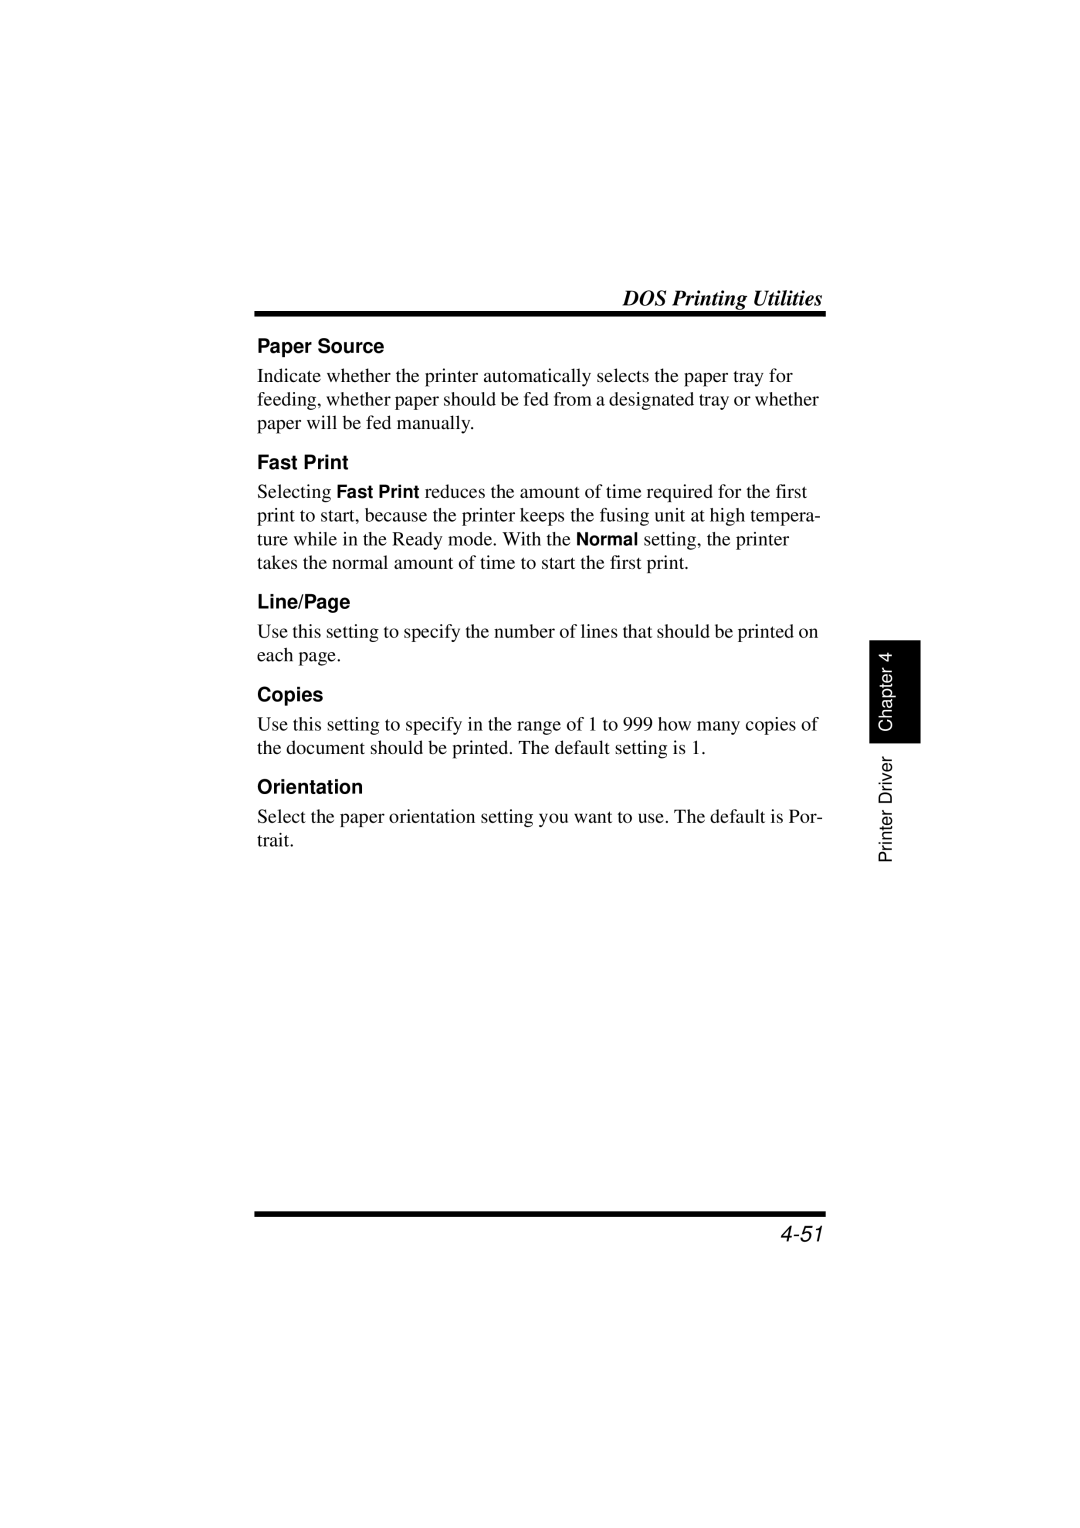 NEC 1100 user manual Paper Source, Fast Print, Line/Page, Copies, Orientation 